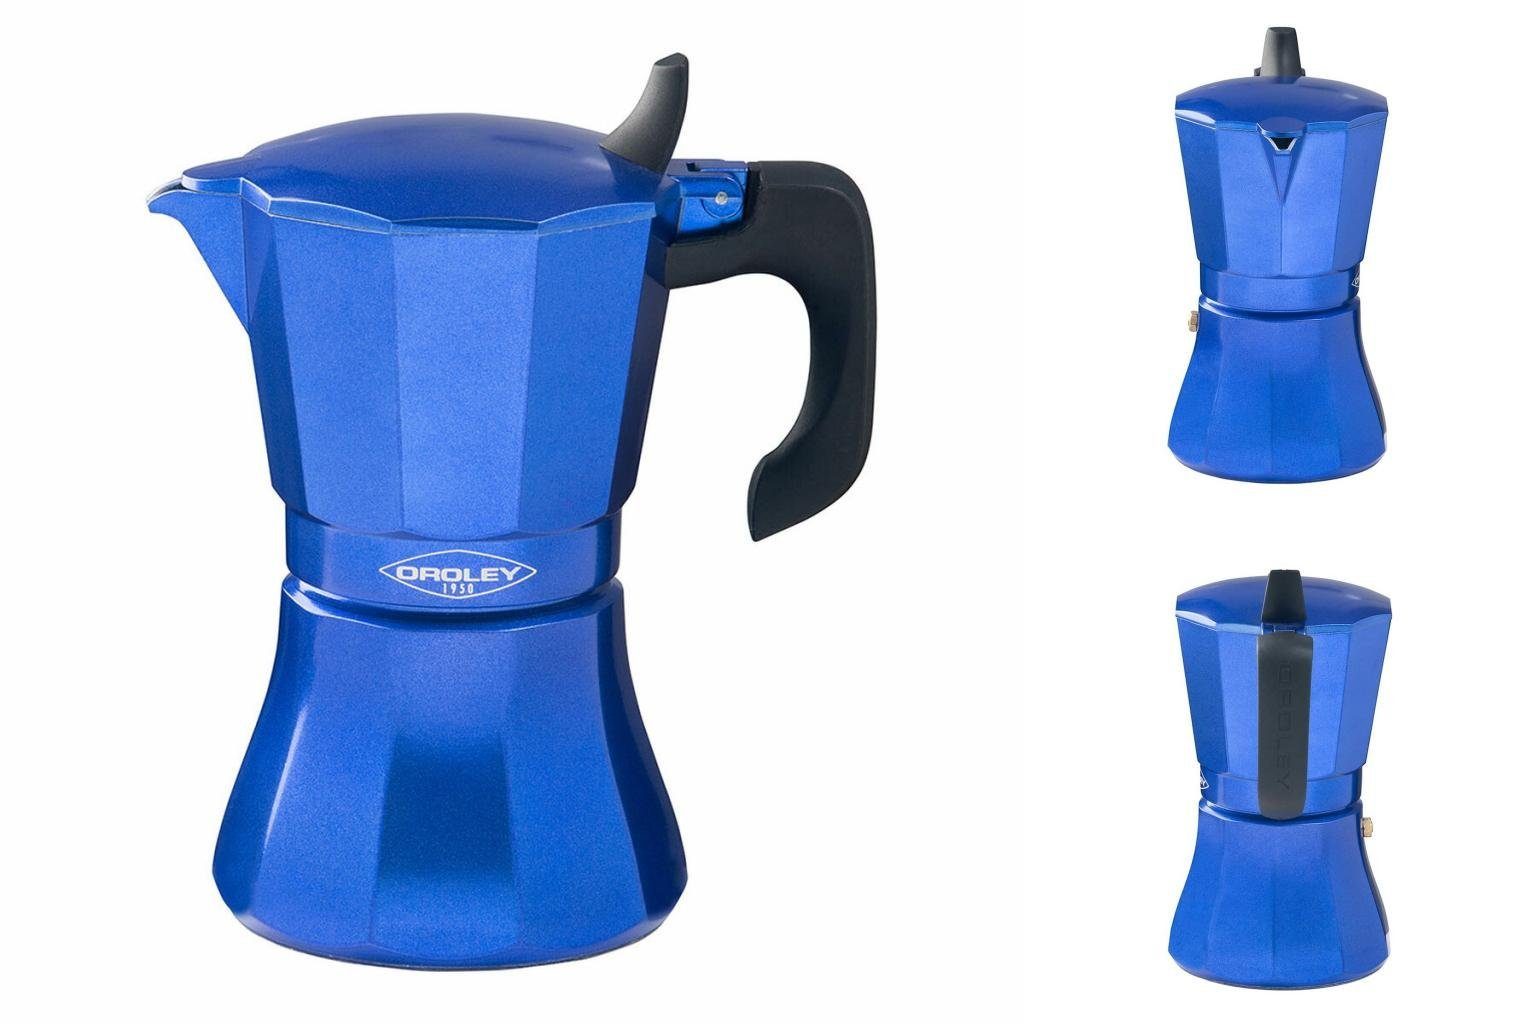 Oroley Espressokocher Espressokocher Italienische Kaffeemaschine Oroley Petra 6 Tassen Blau